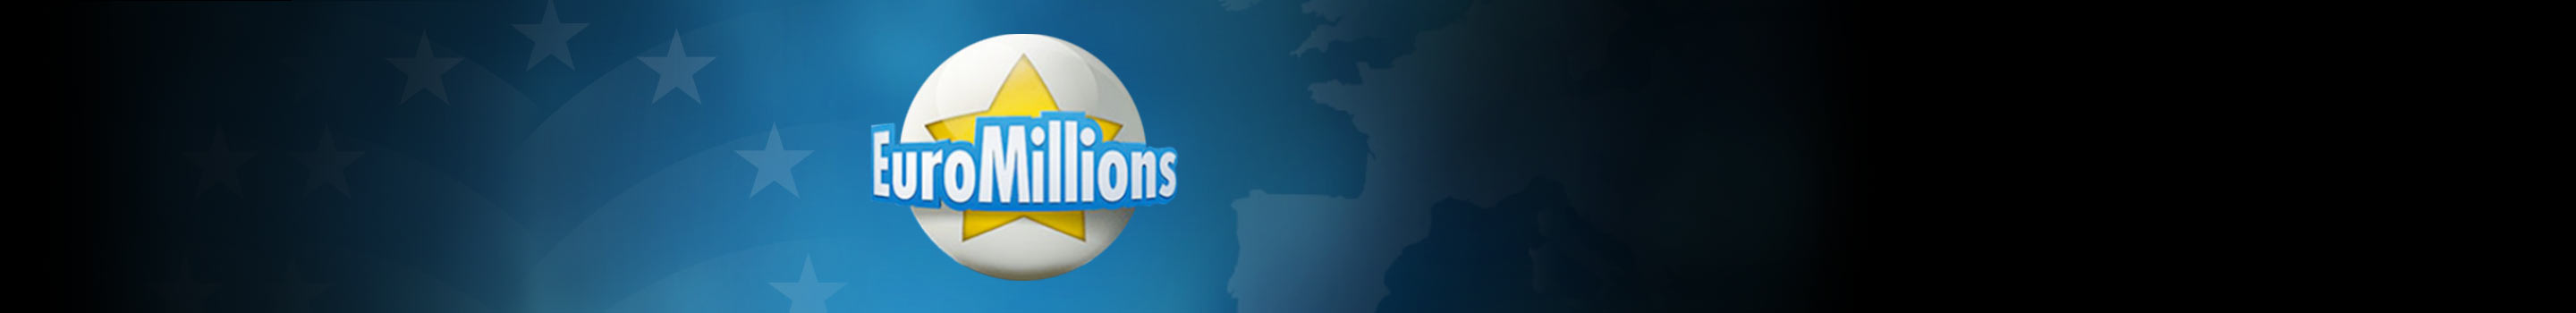 EuroMillions – największa europejska loteria